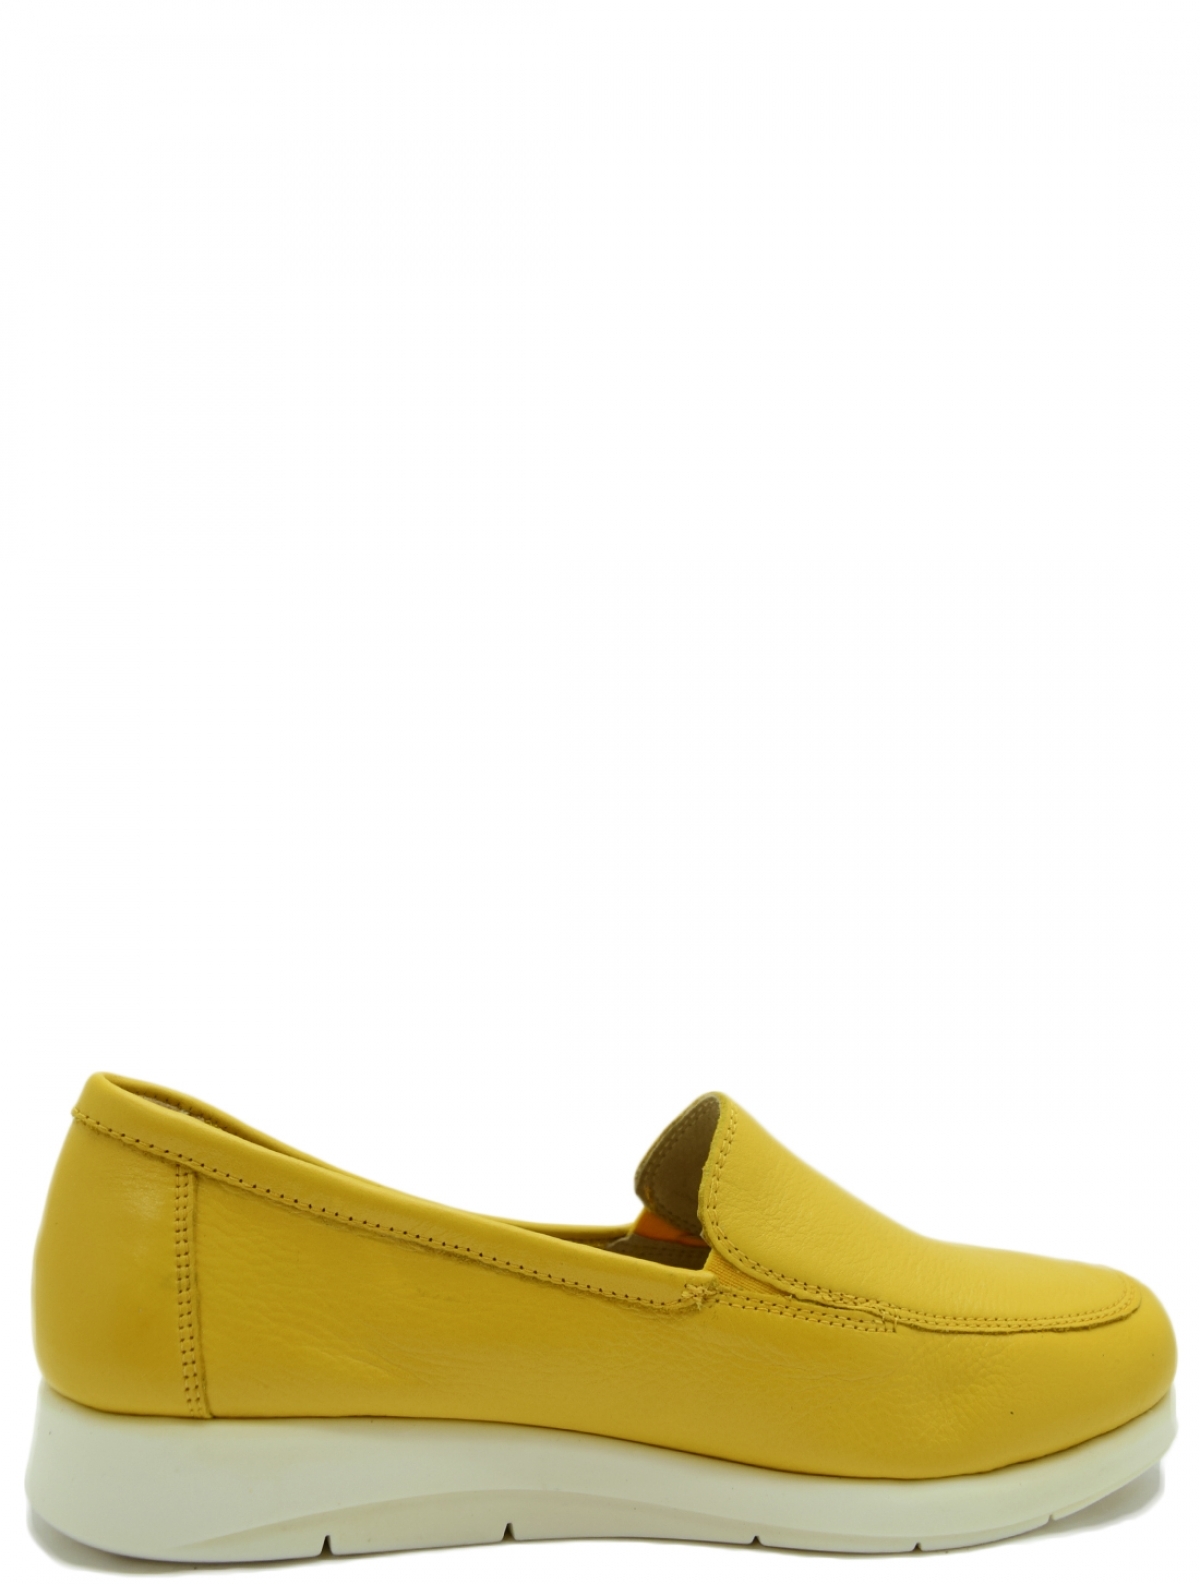 Caprice 9-24751-24-605 женские туфли